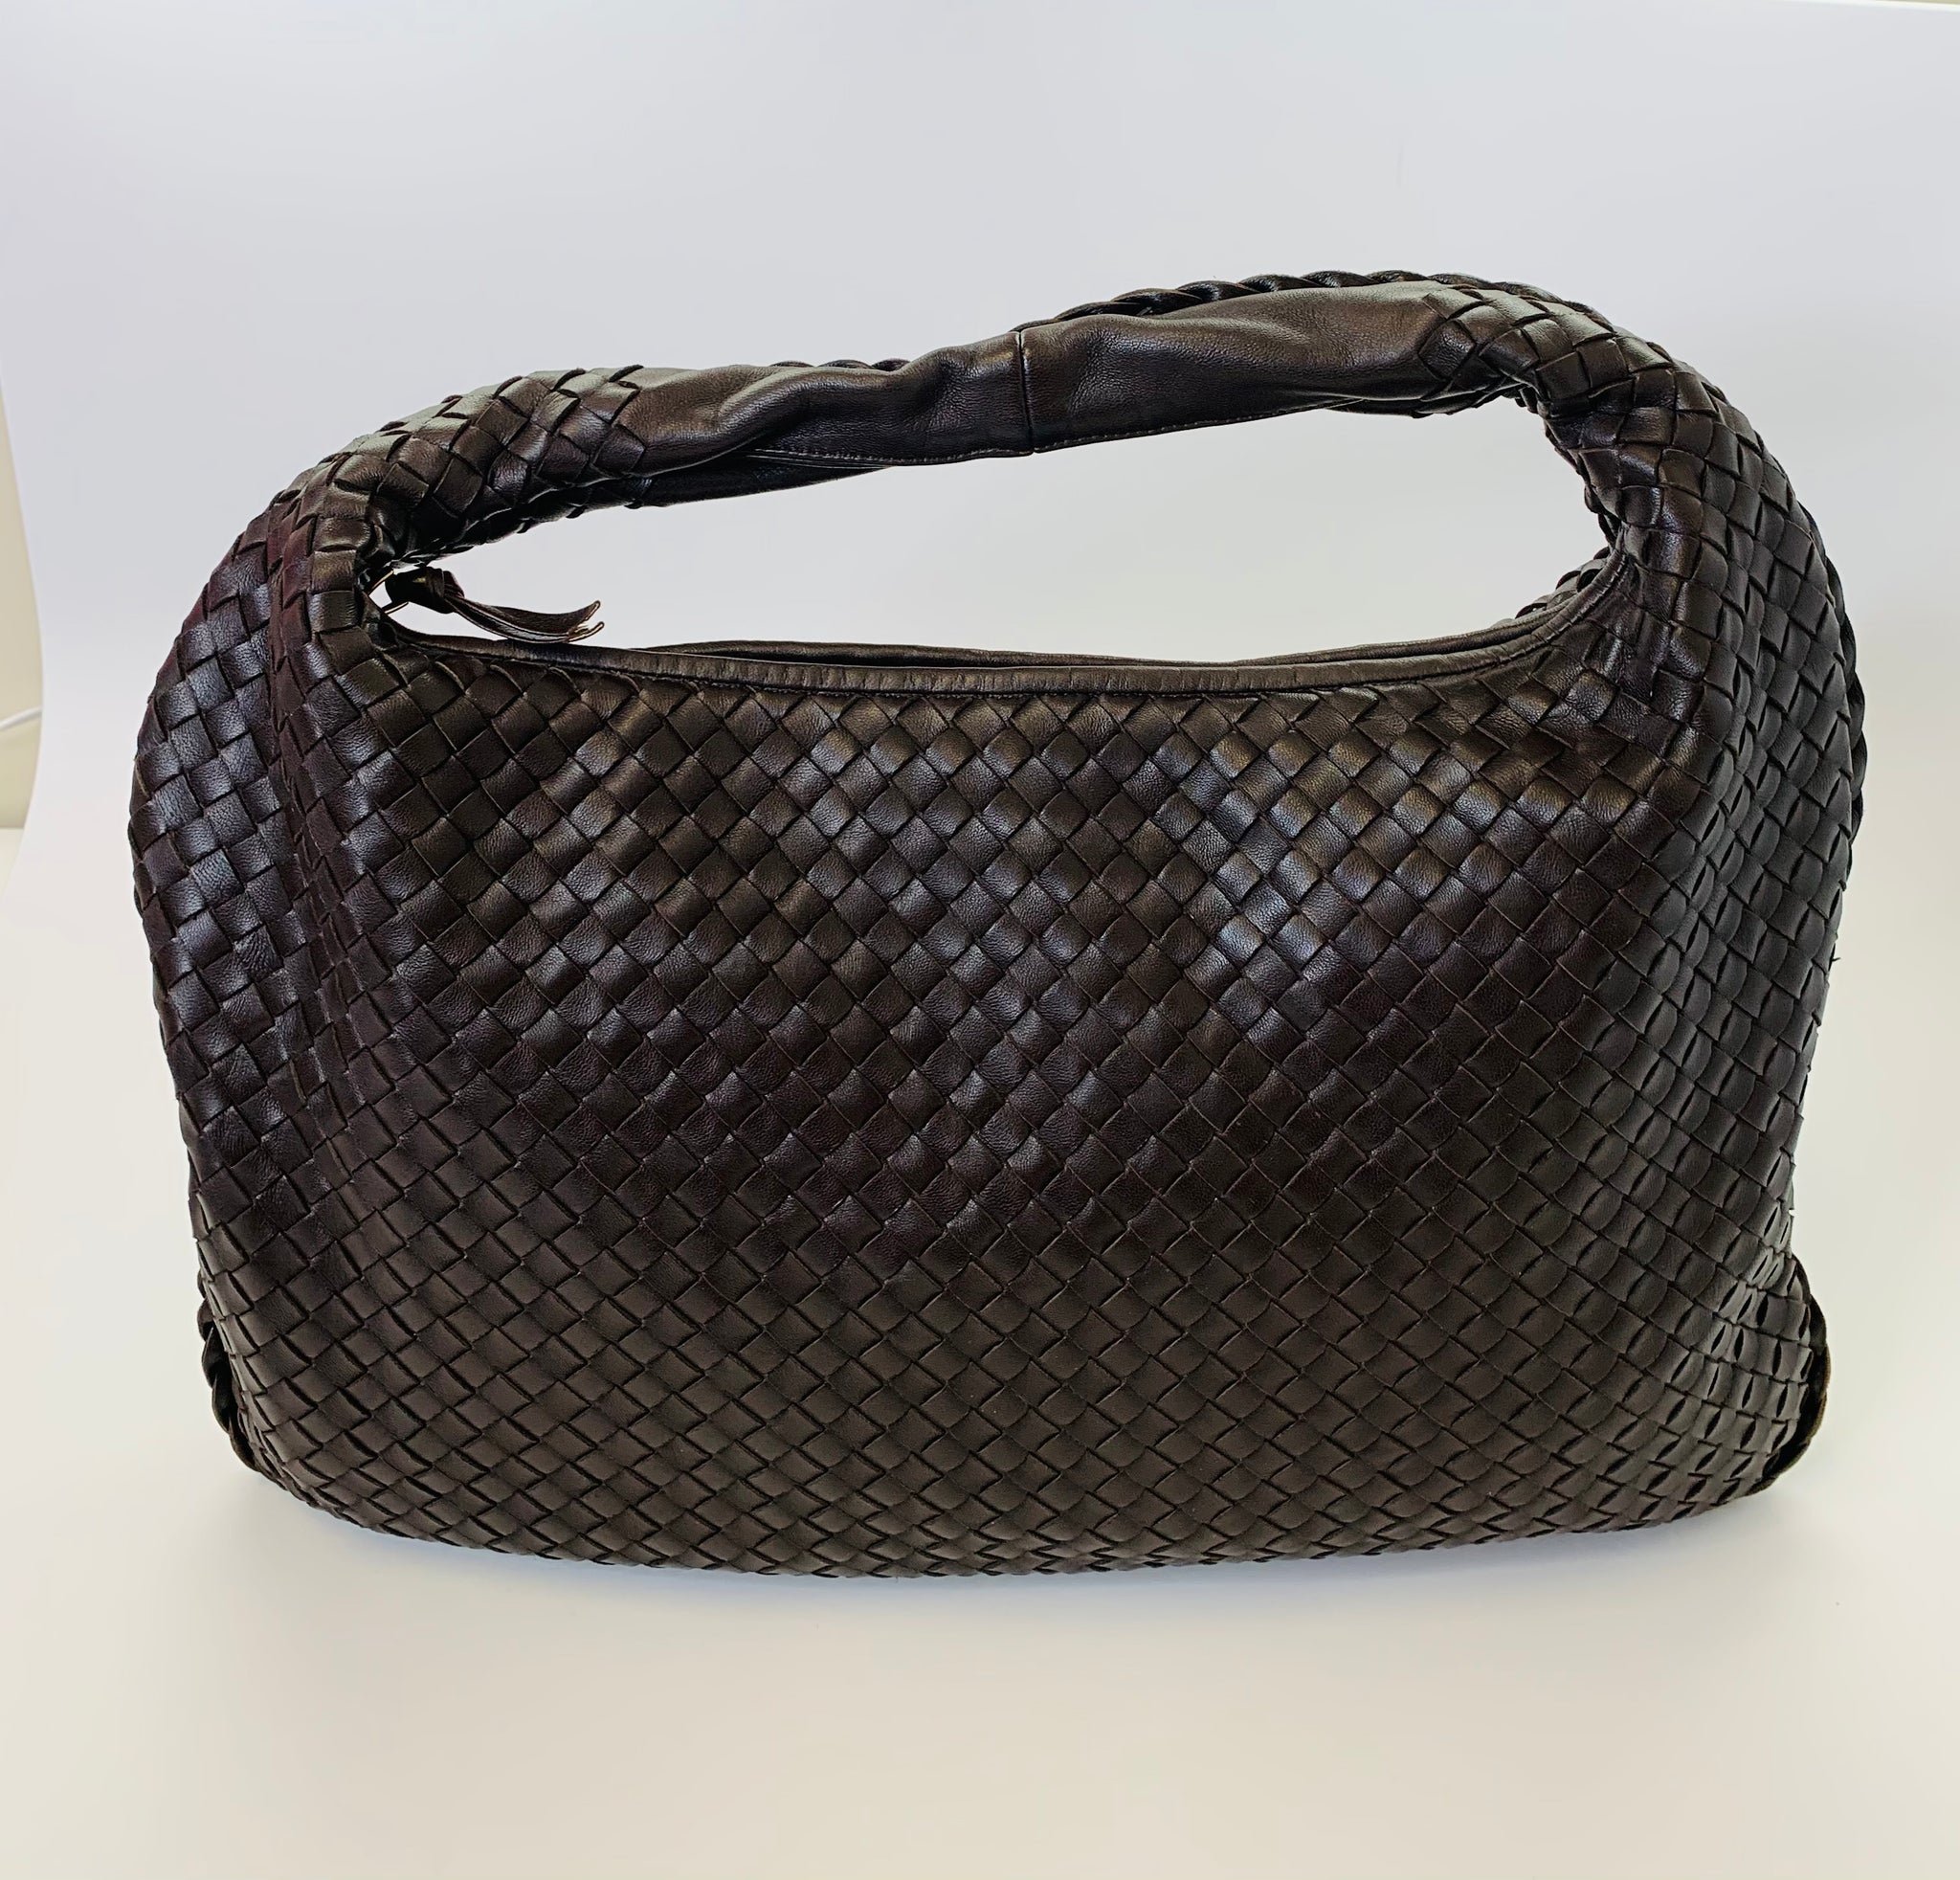 Bottega Veneta Intrecciato Hobo Handbag - Authentic Pre-Owned Designer Handbags